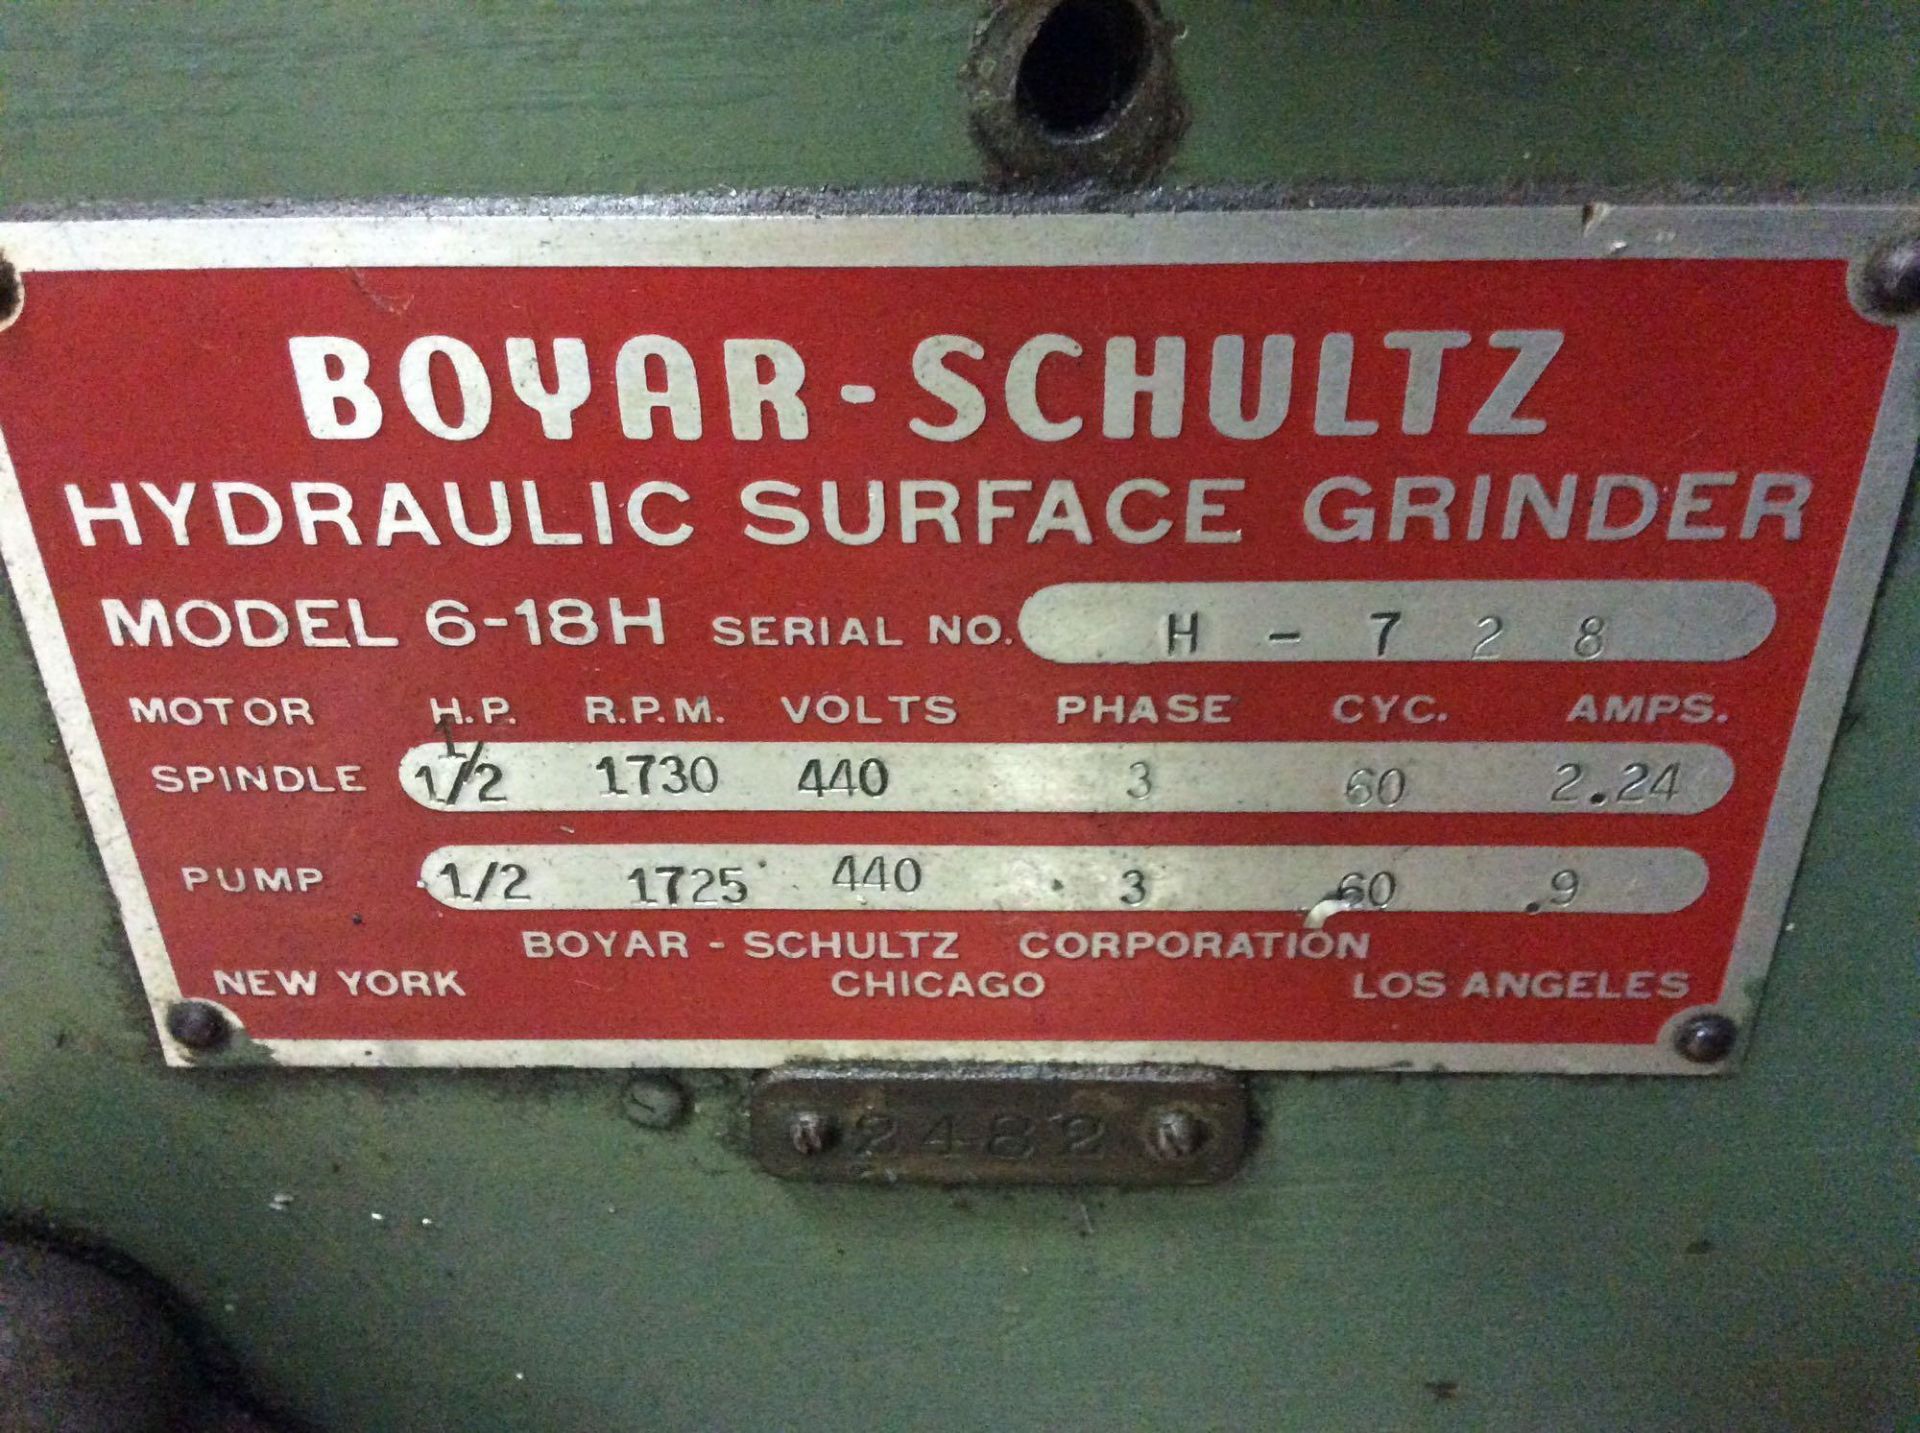 Boyar Schultz surface grinder, 8" wheel, mn 6-18H, sn H-728, 1730 rpm, 1/2 hp, 3 phase, with Walker - Image 3 of 4